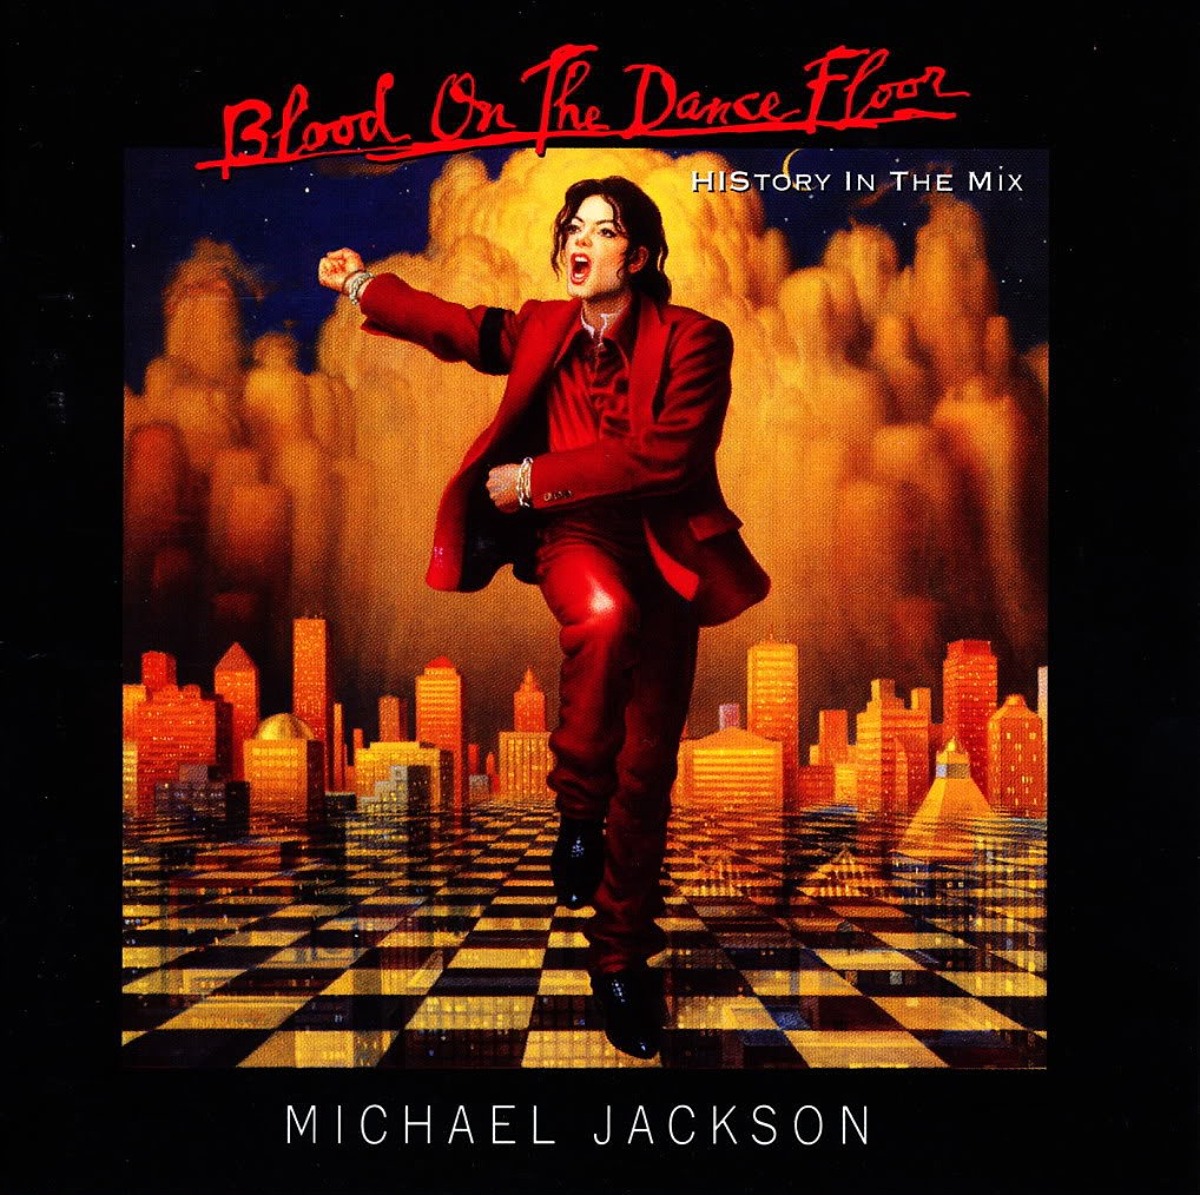 Обложка альбома «Blood on the Dance Floor» Майкла Джексона